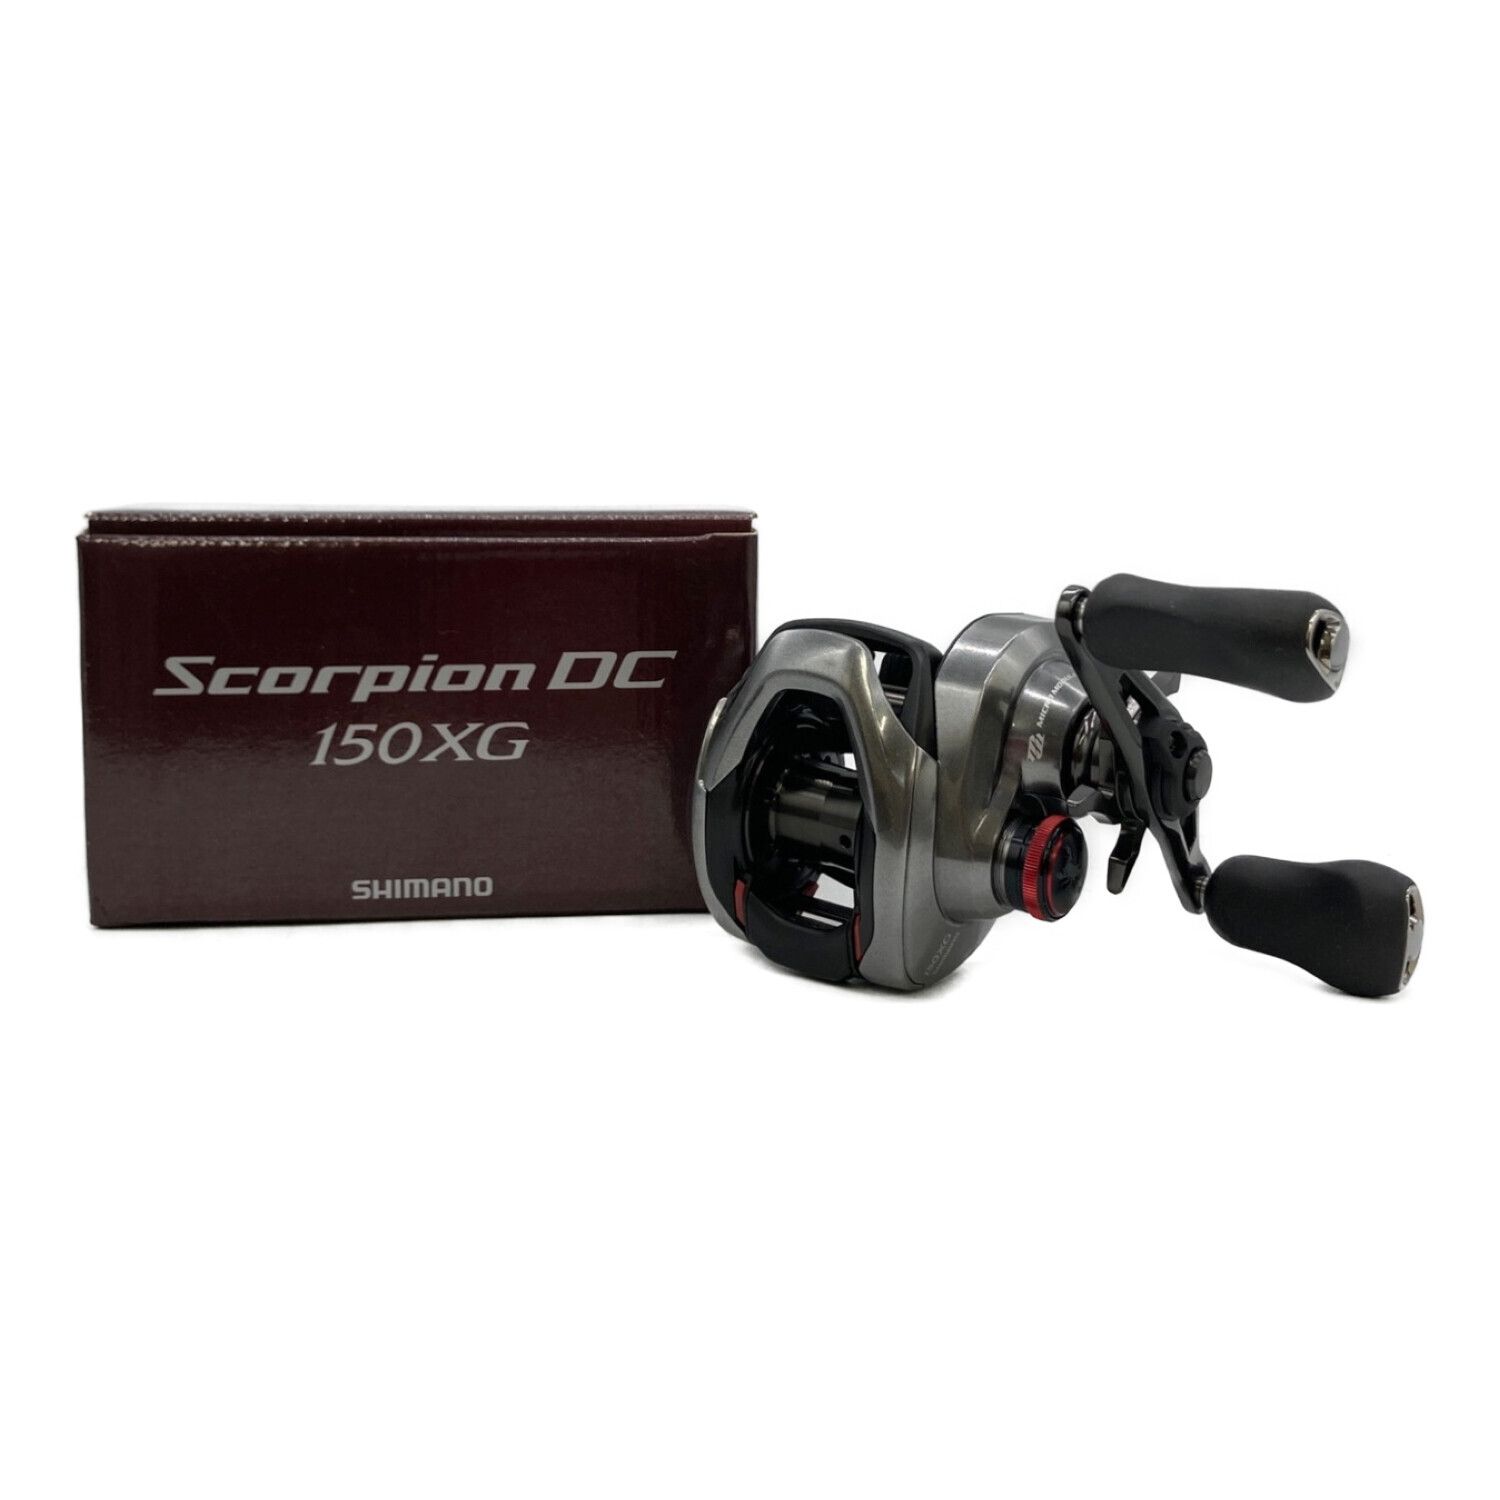 Scorpion DC 150XG